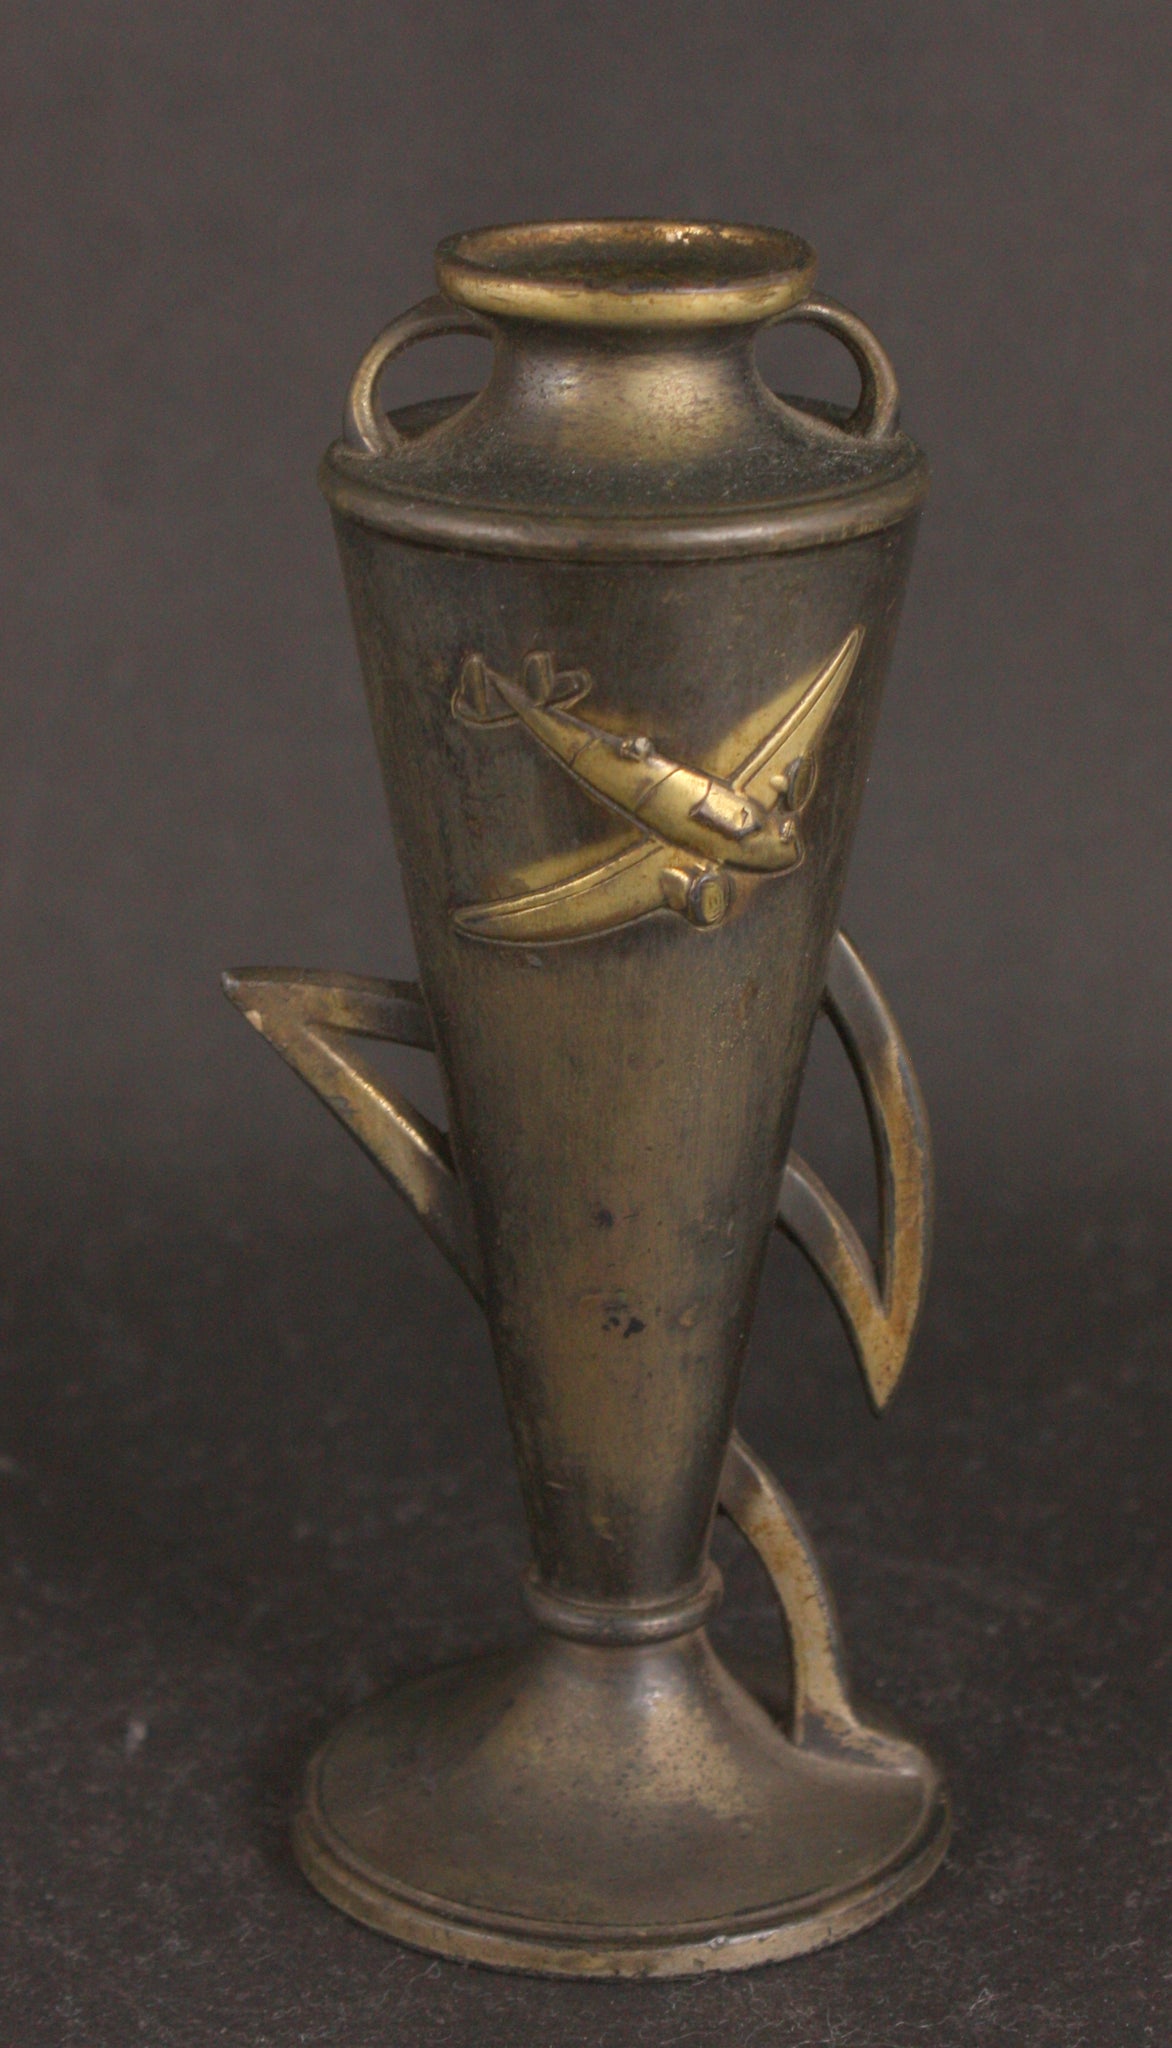 Antique Japanese Military Biplane Fighter Metal Vase